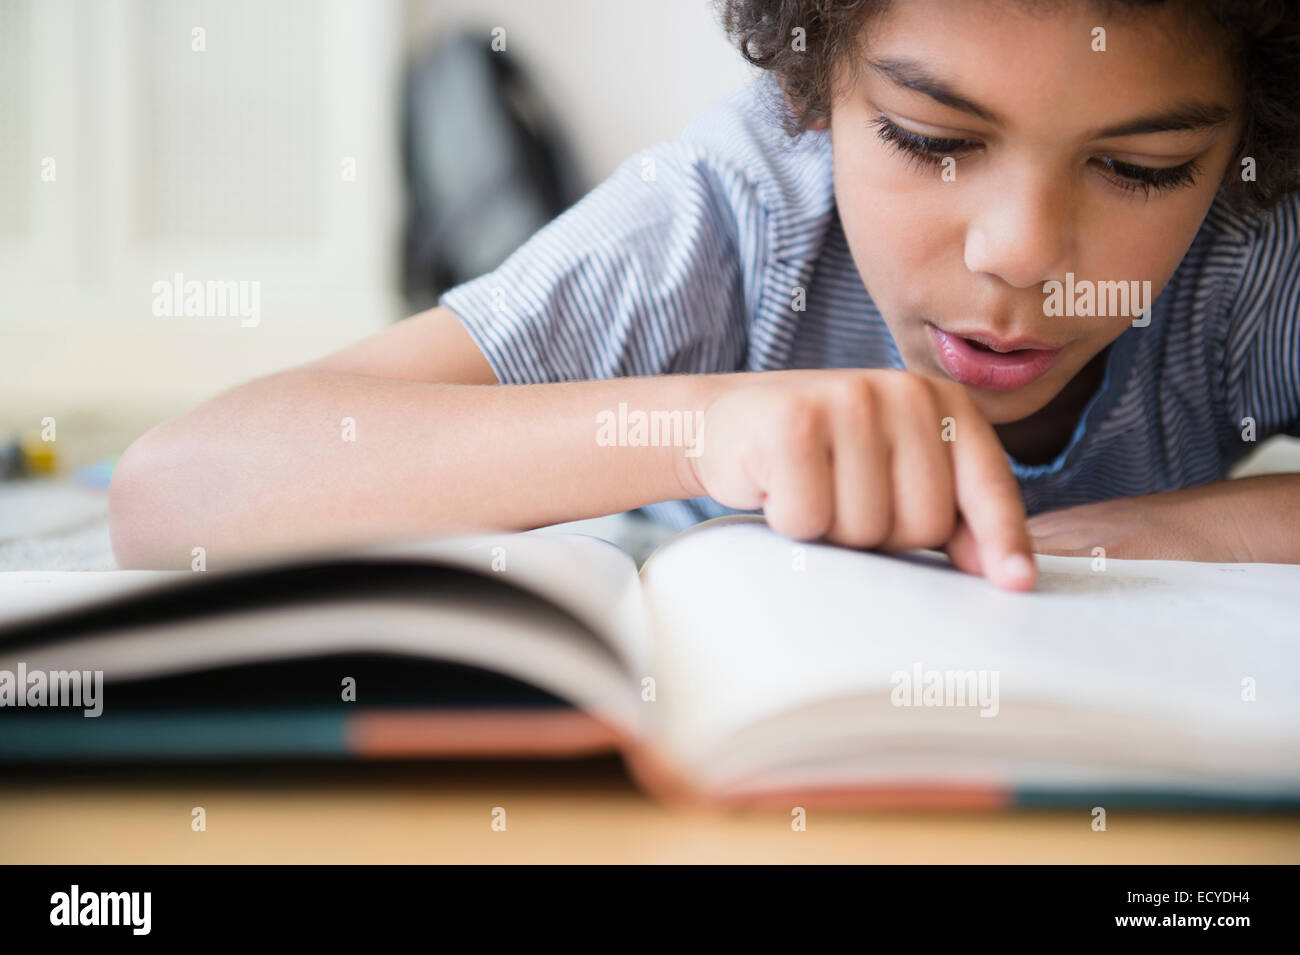 Mixed race boy reading book at desk Stock Photo